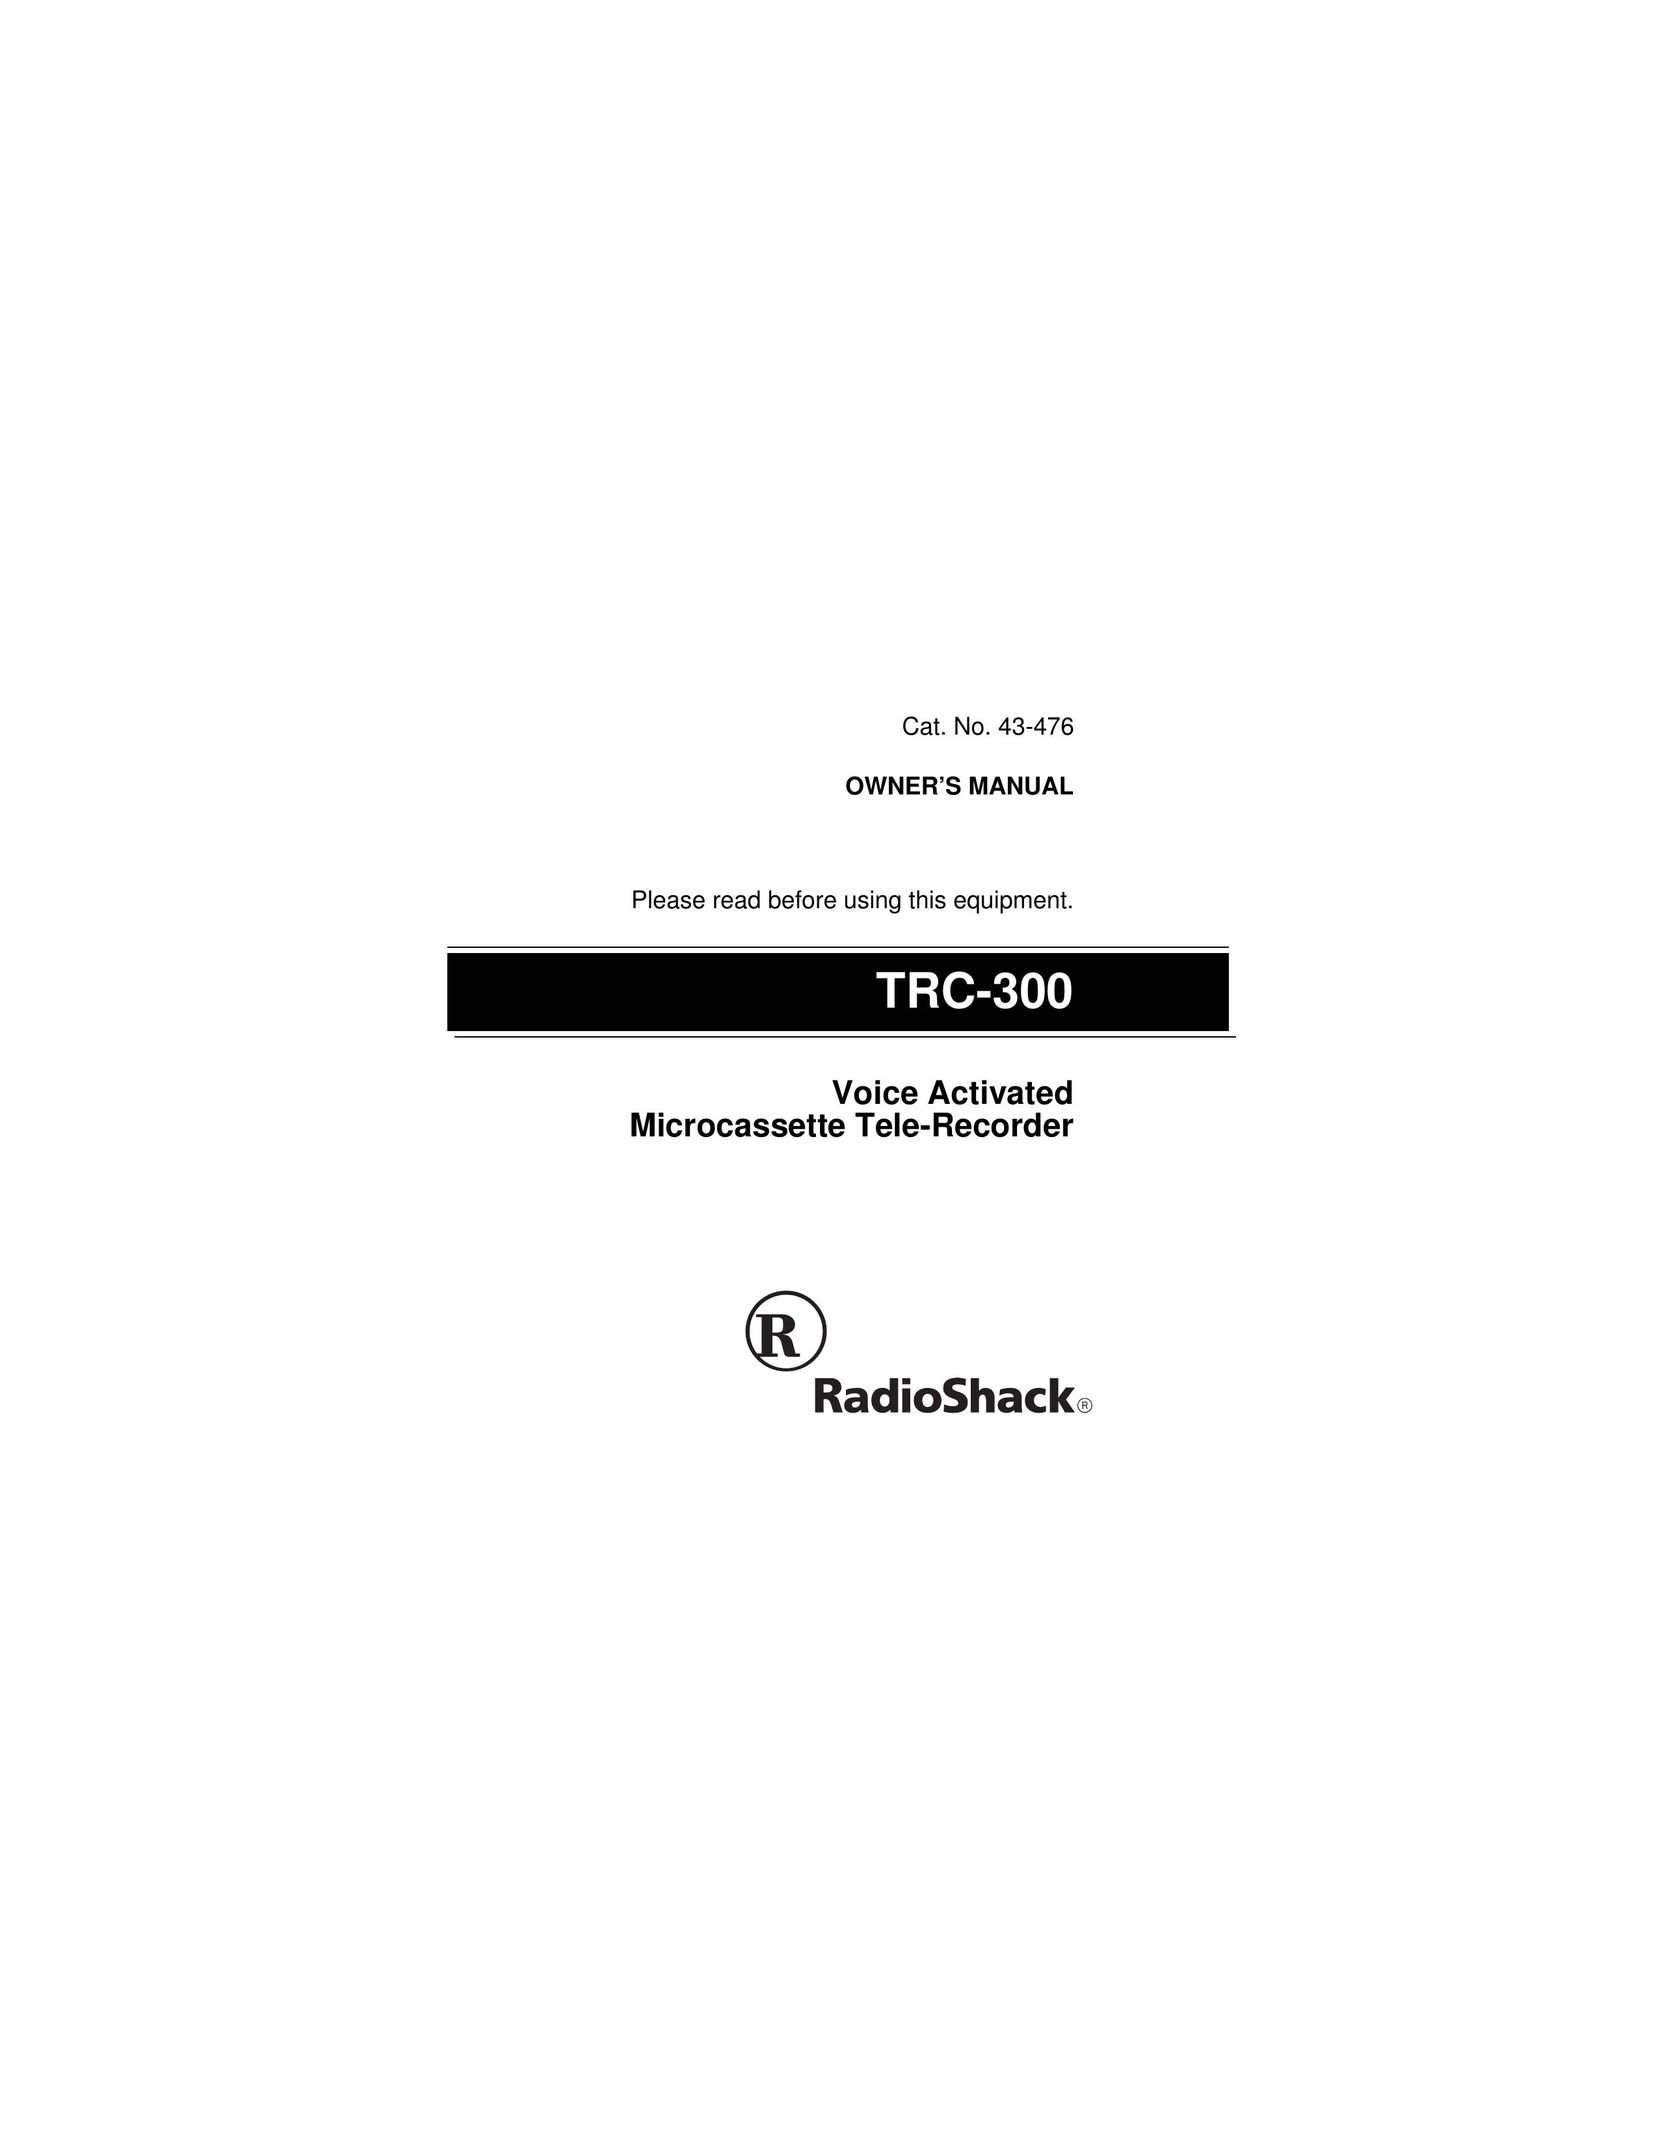 Radio Shack TRC-300 Microcassette Recorder User Manual